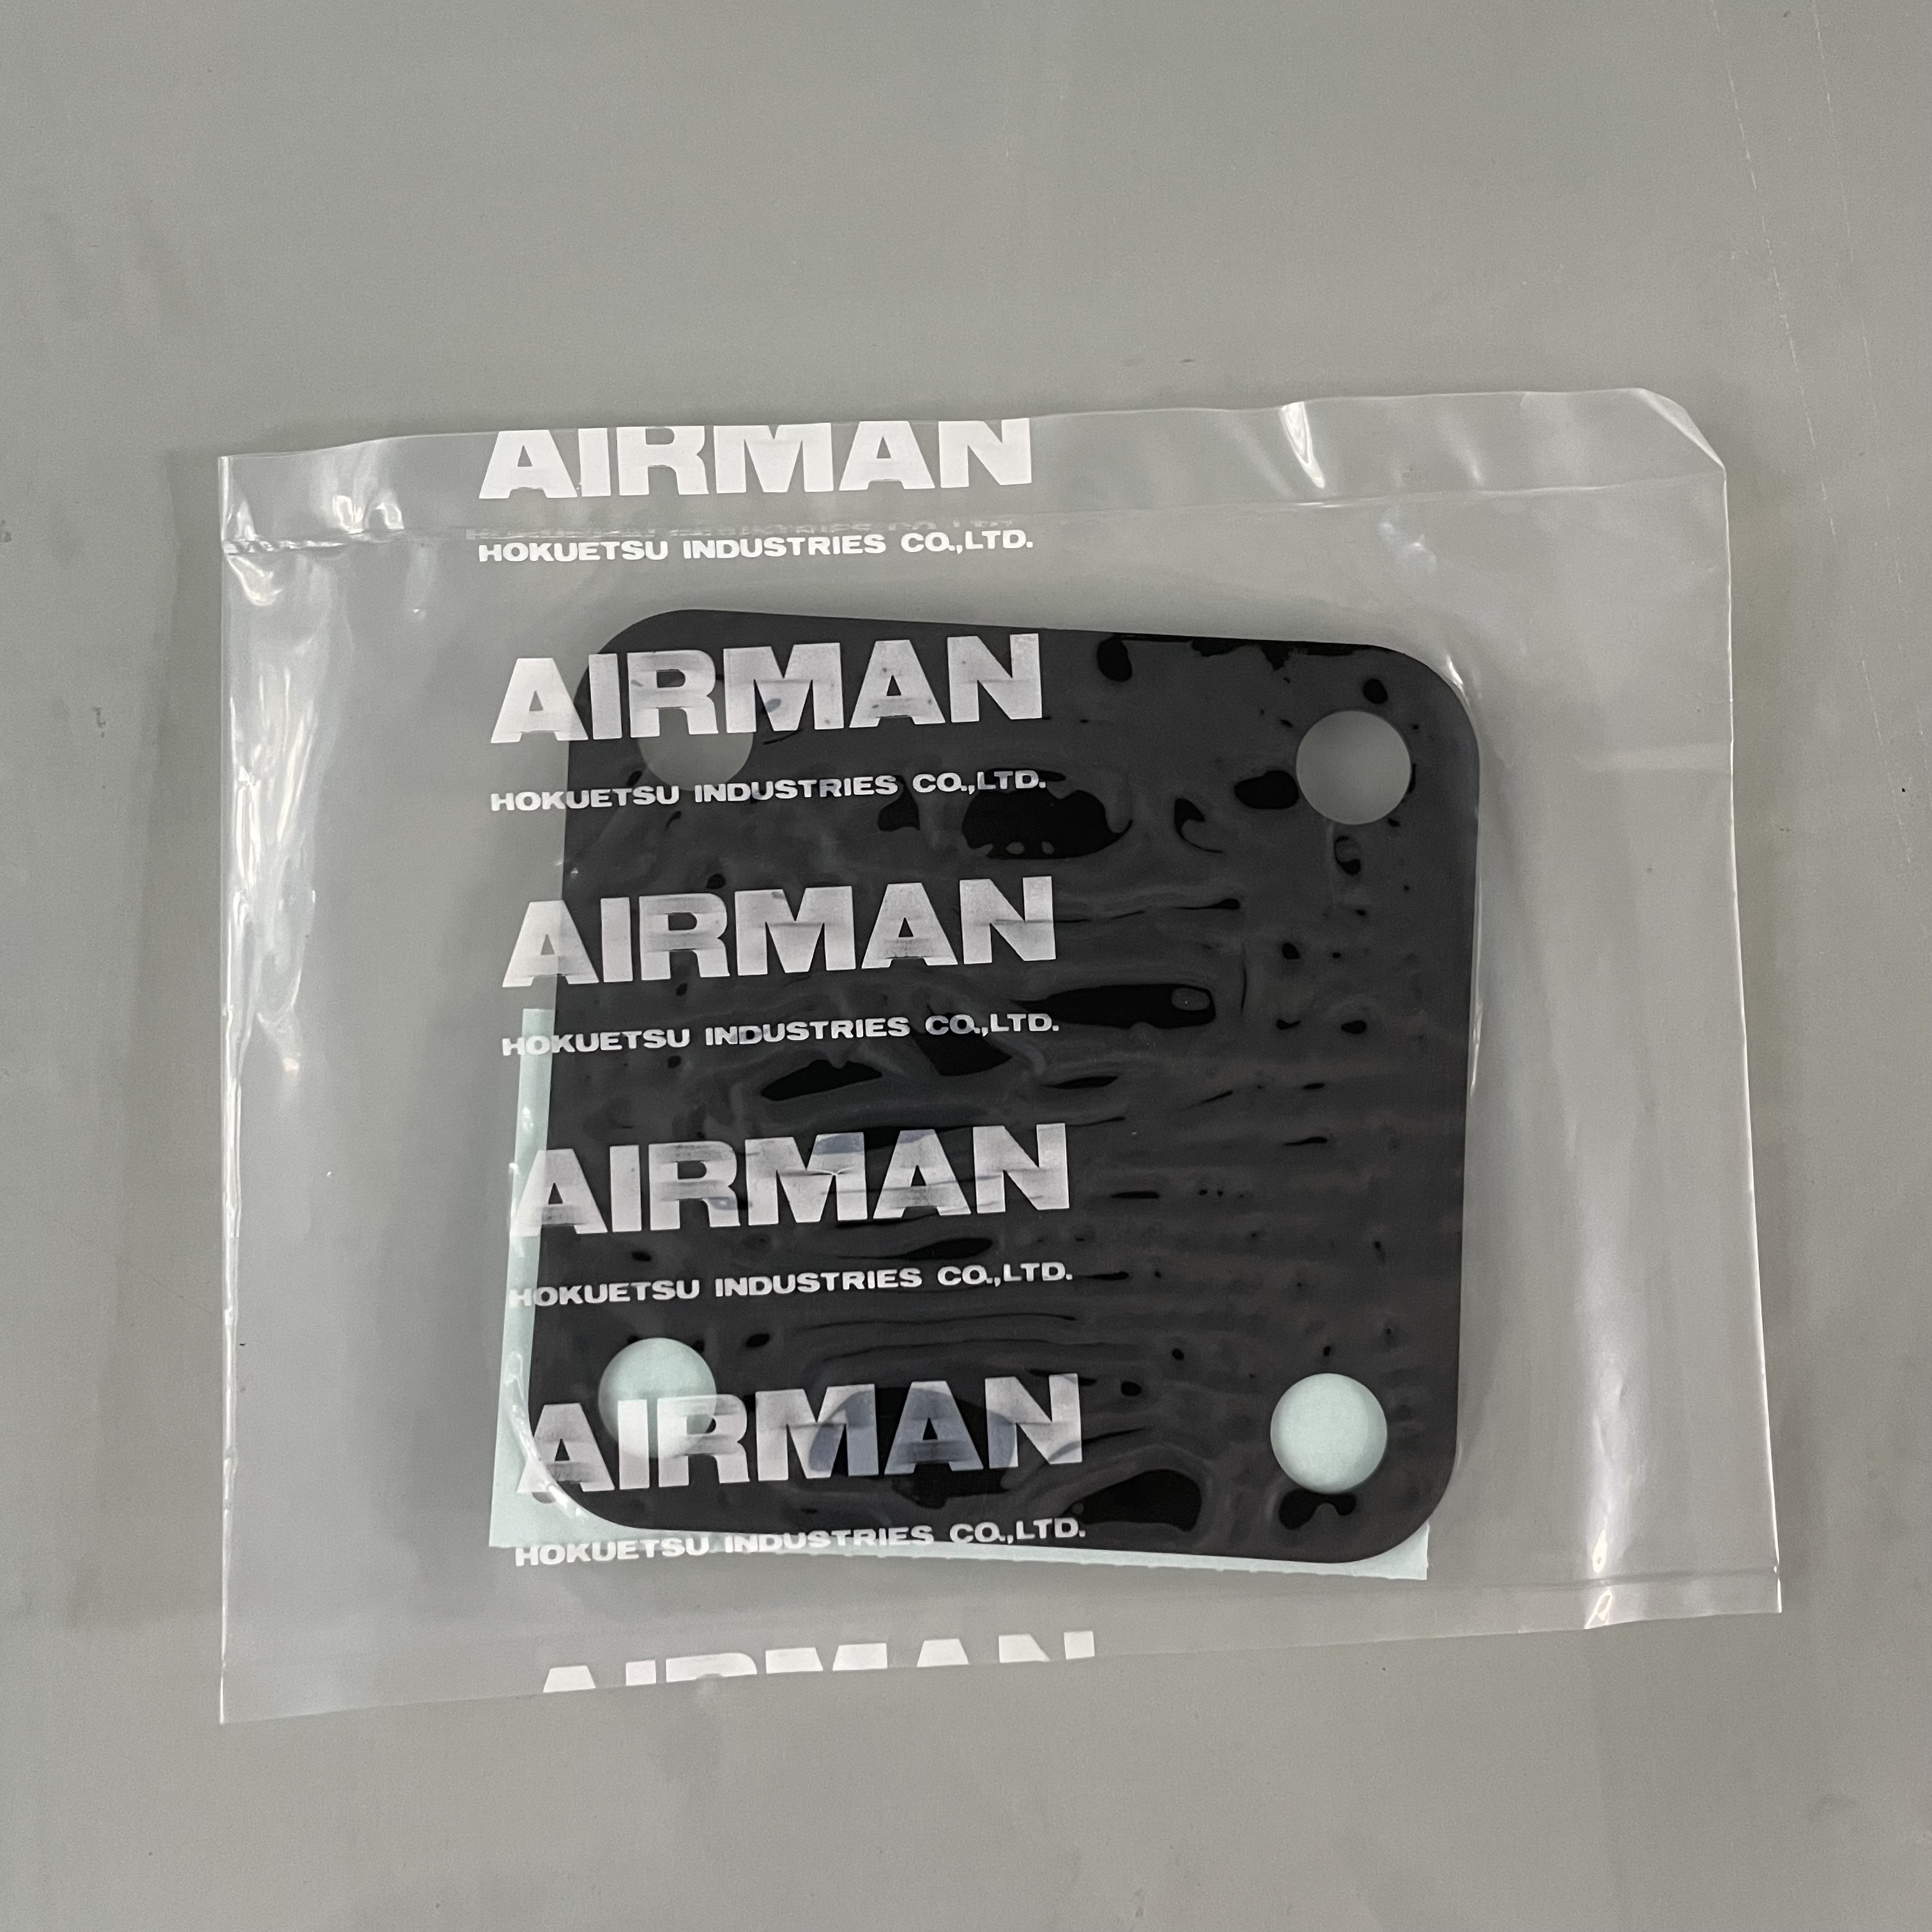 Airman Spare Parts Diaphragm 3643700100